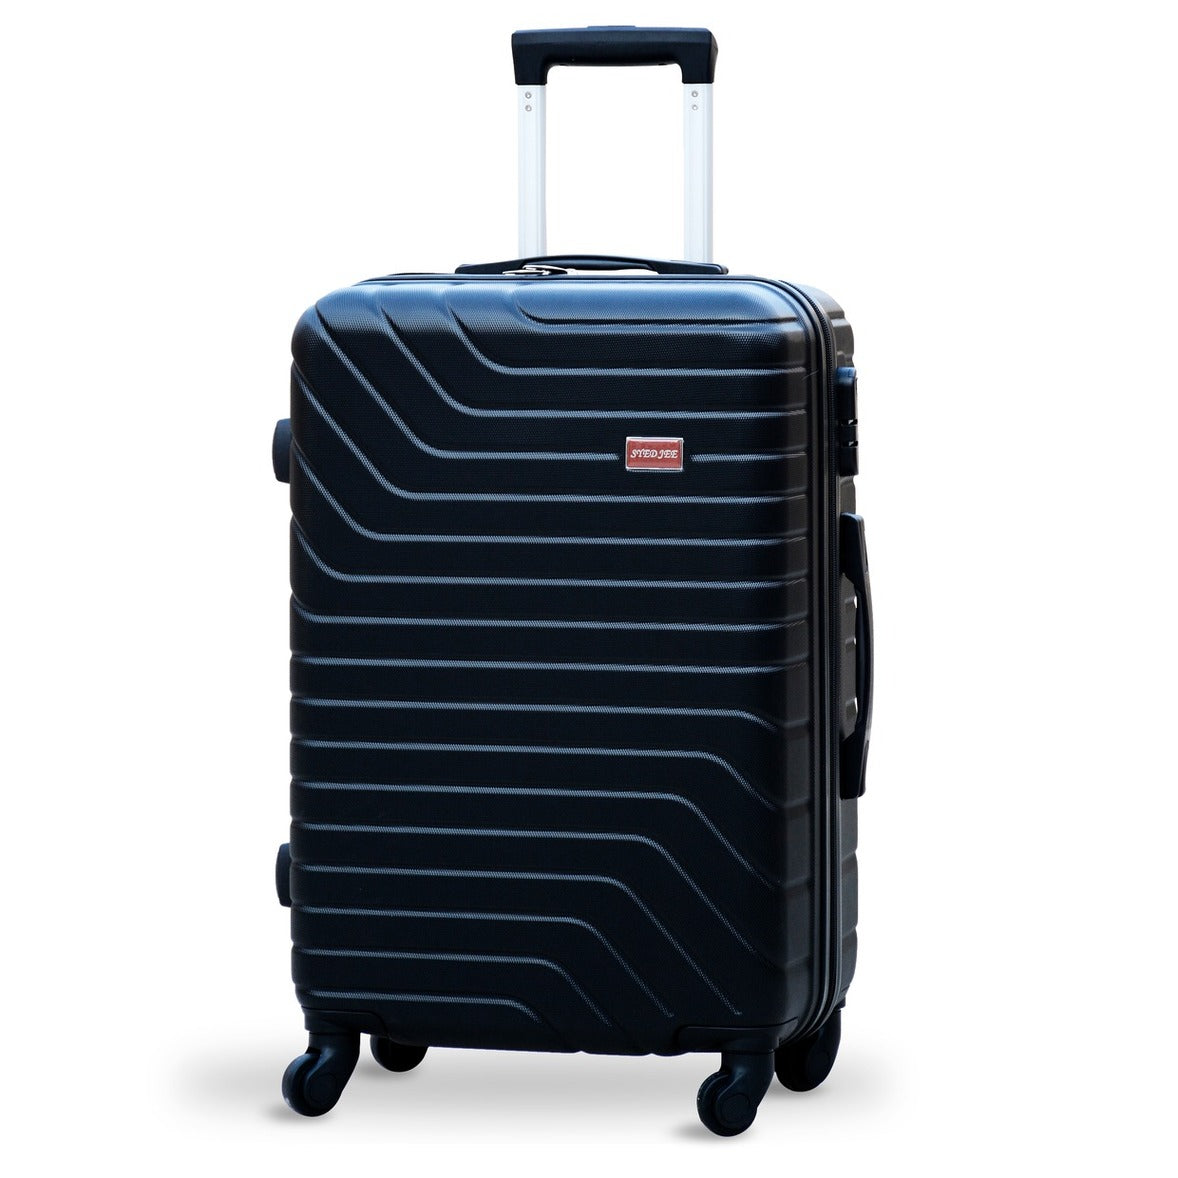 28" Black ColourSJ ABS Luggage Lightweight Hard Case Trolley Bag Zaappy.com